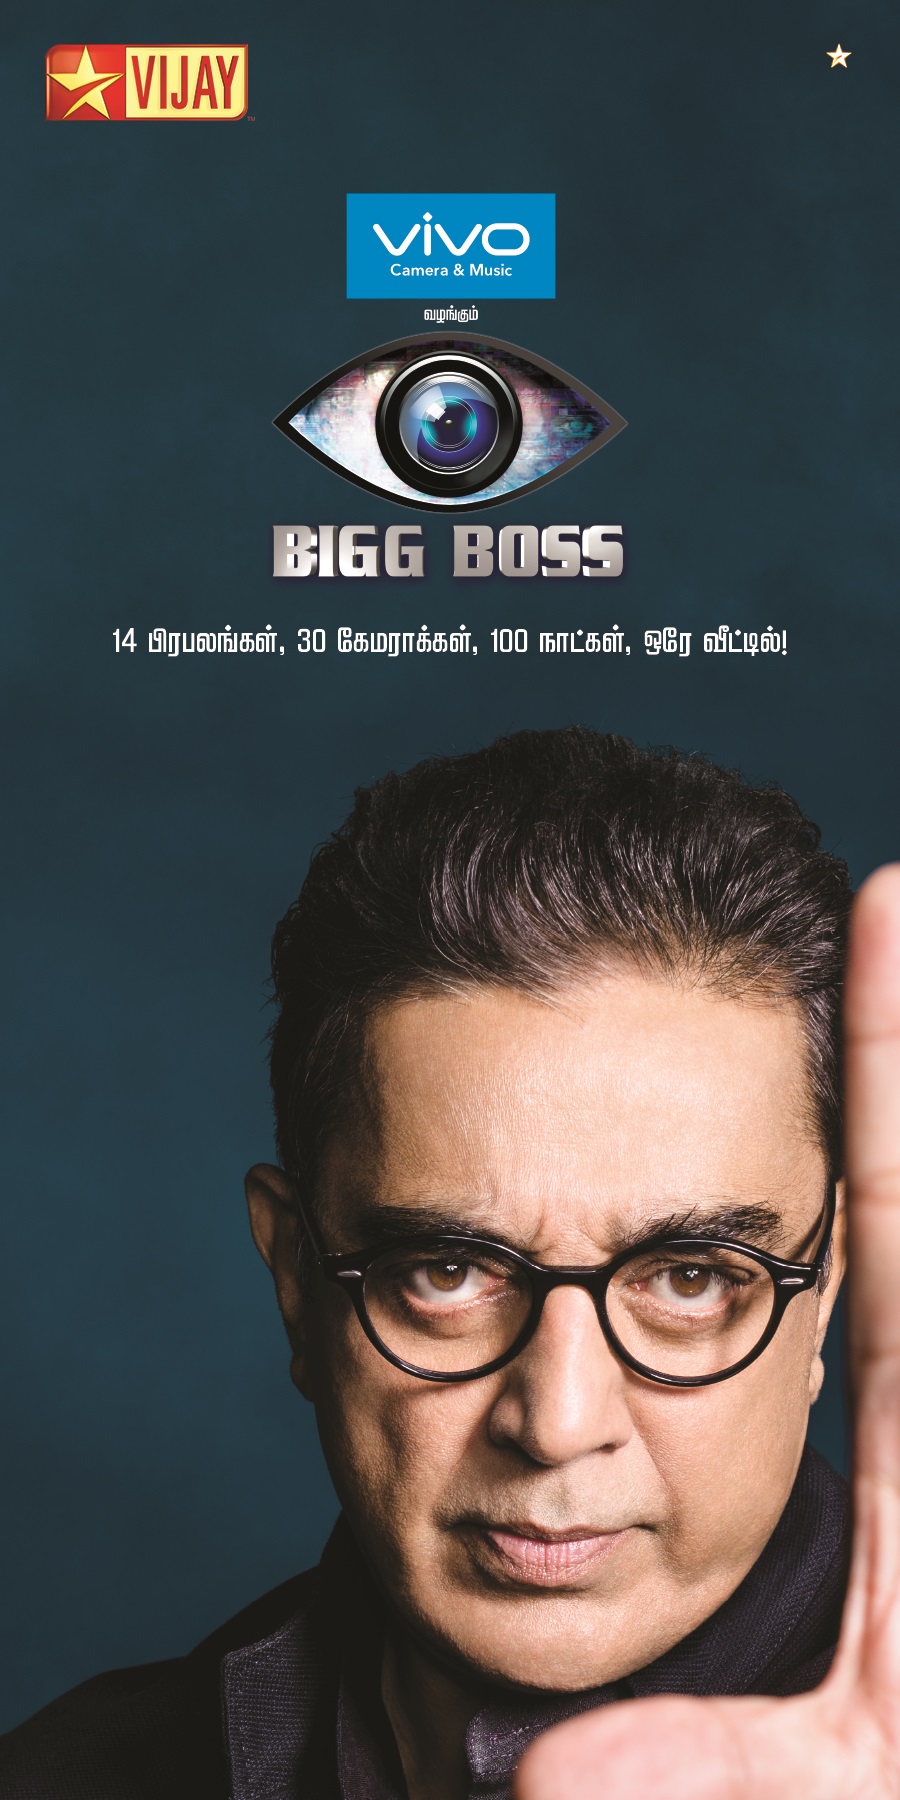 Big Boss Images (6)